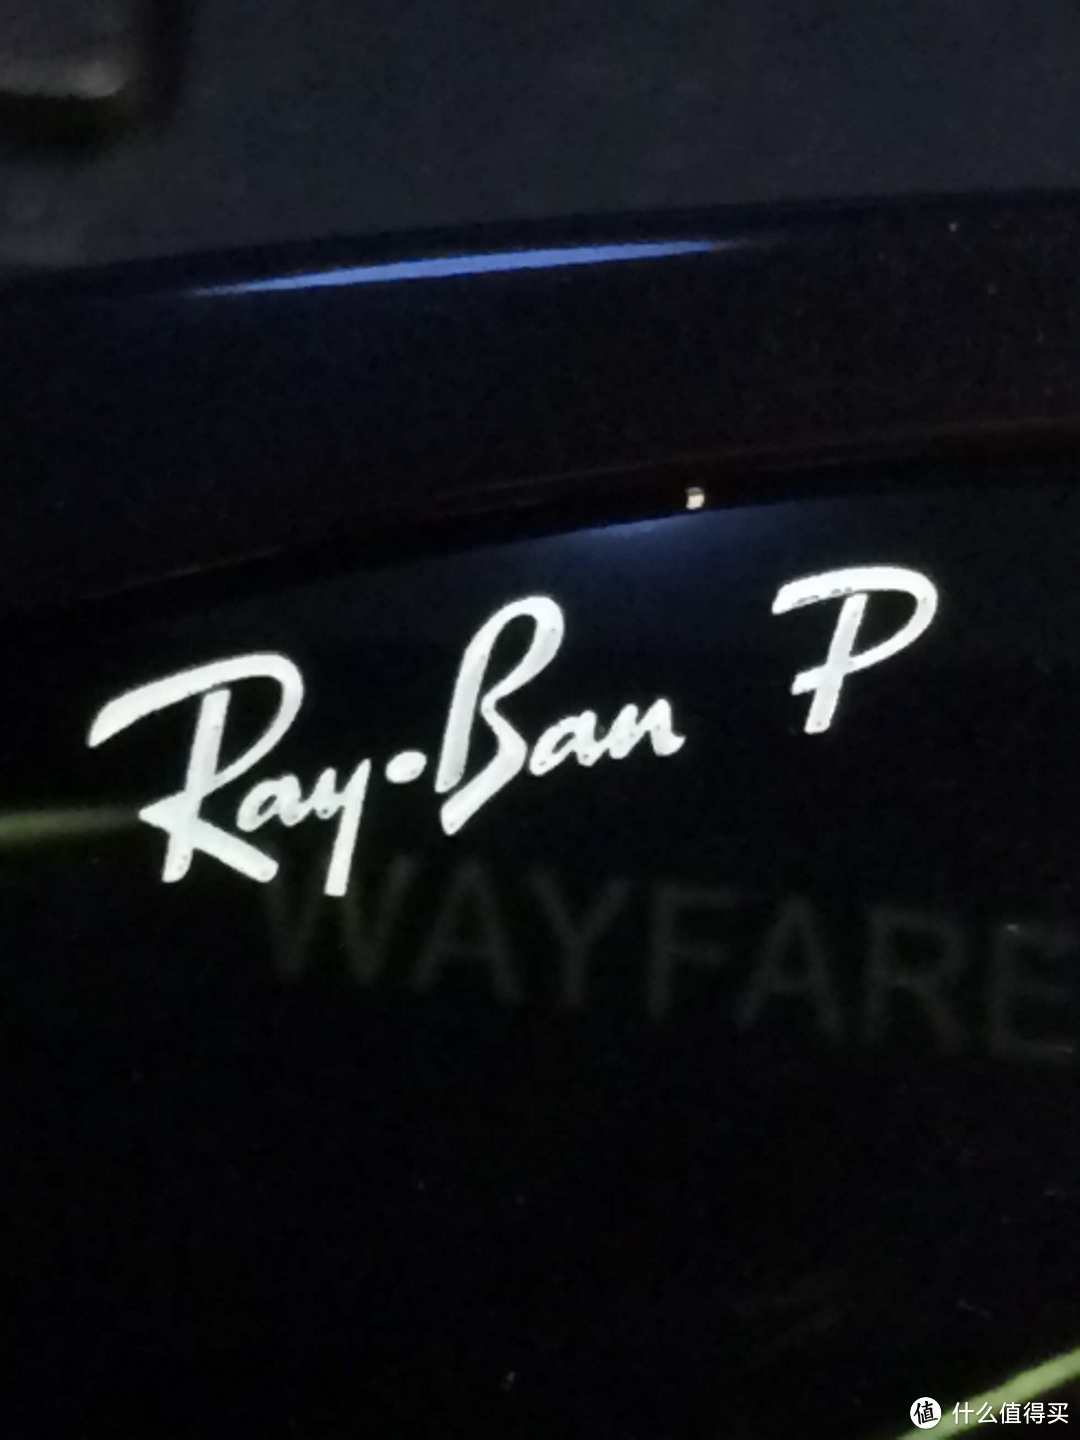 Ray-Ban 雷朋 RB3025/RB2132/RB2140F 太阳镜完整报告